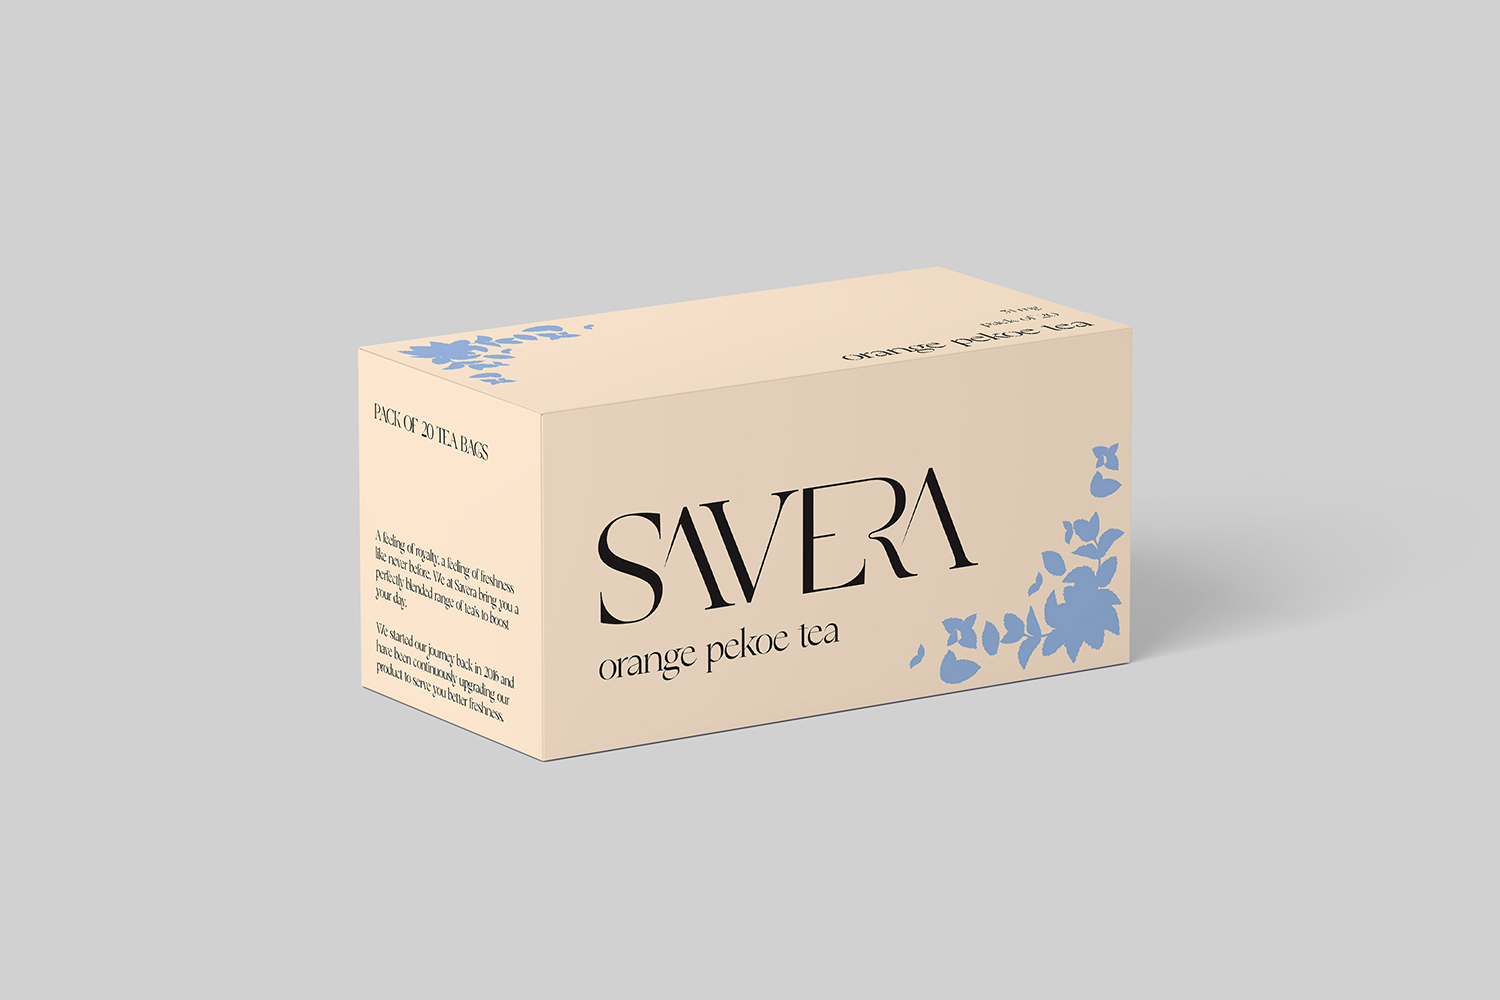 image of the tea box for Savera